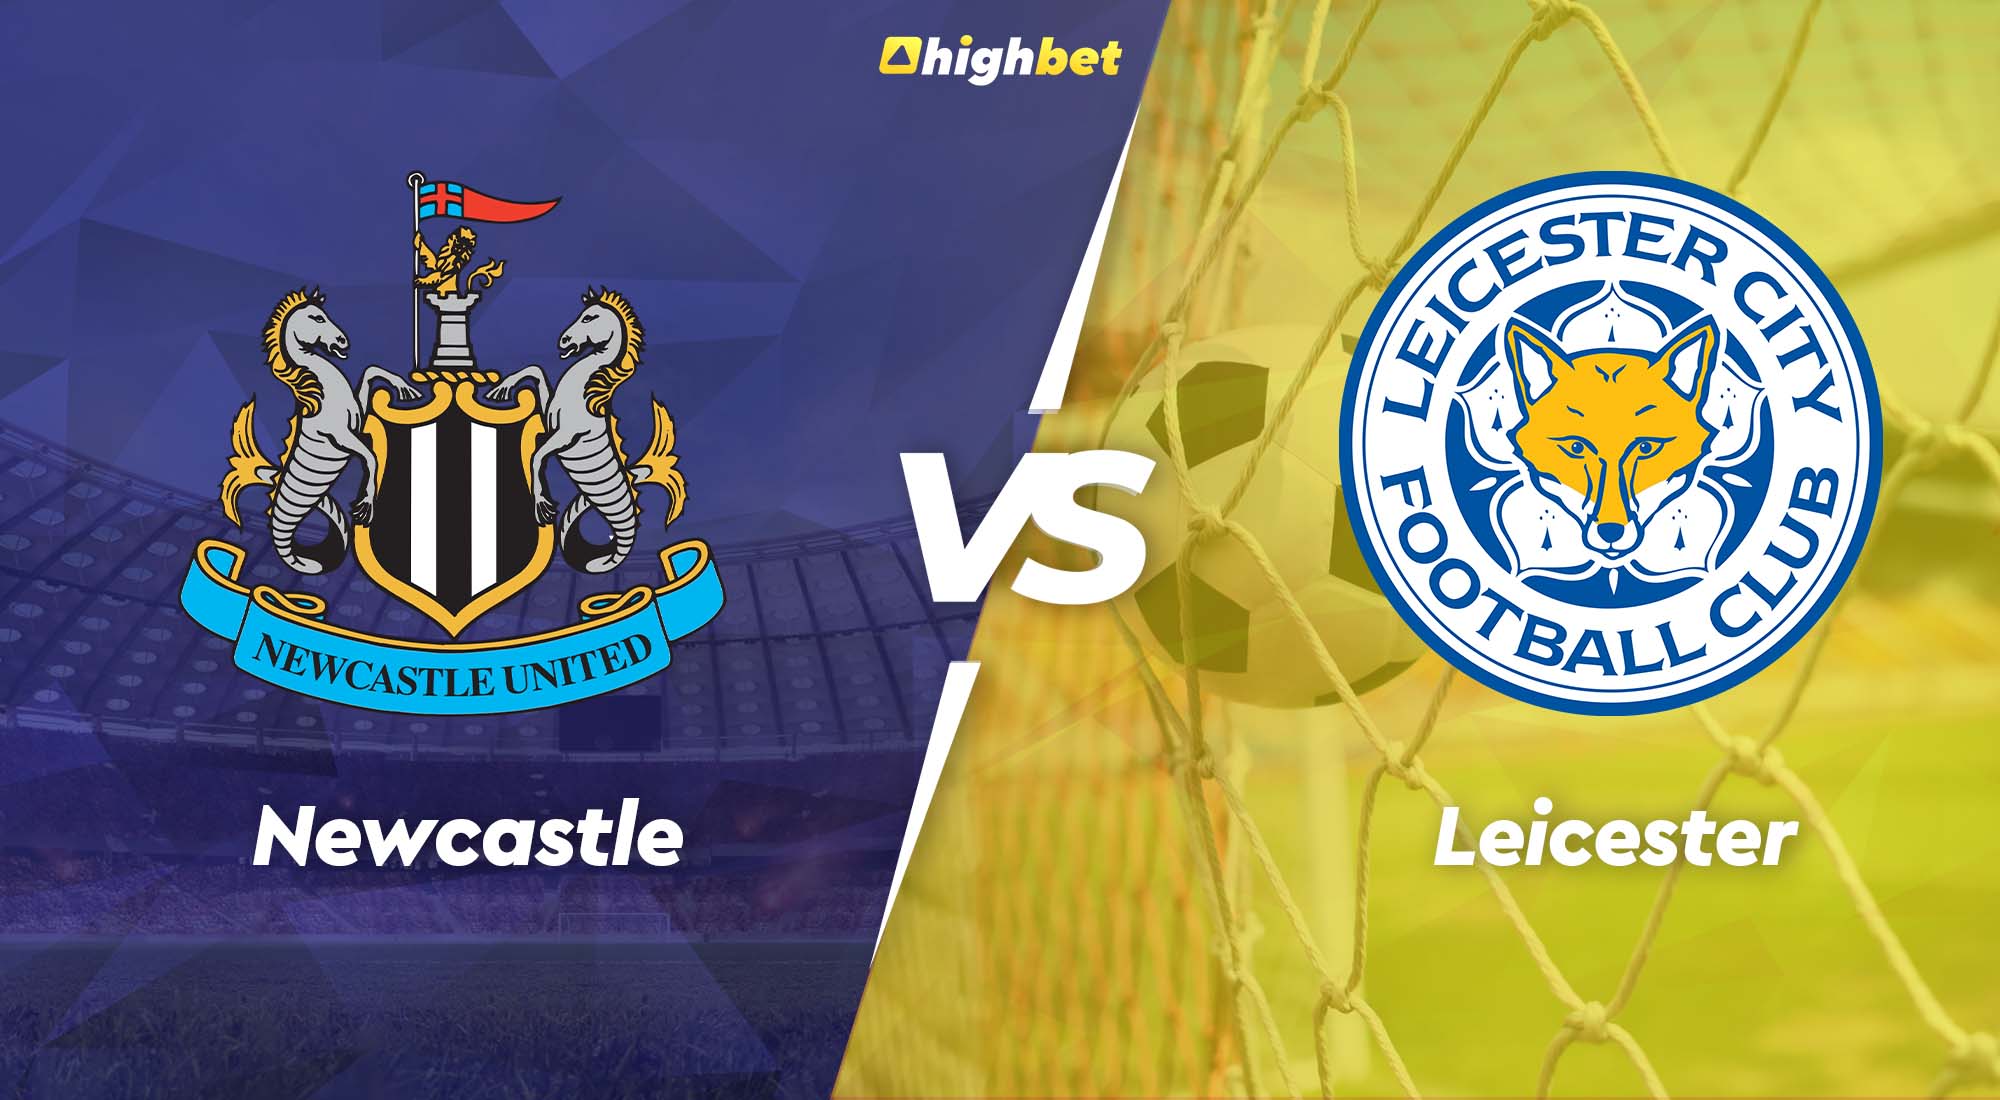 Newcastle vs Leicester - highbet Premier League Pre-Match Analysis